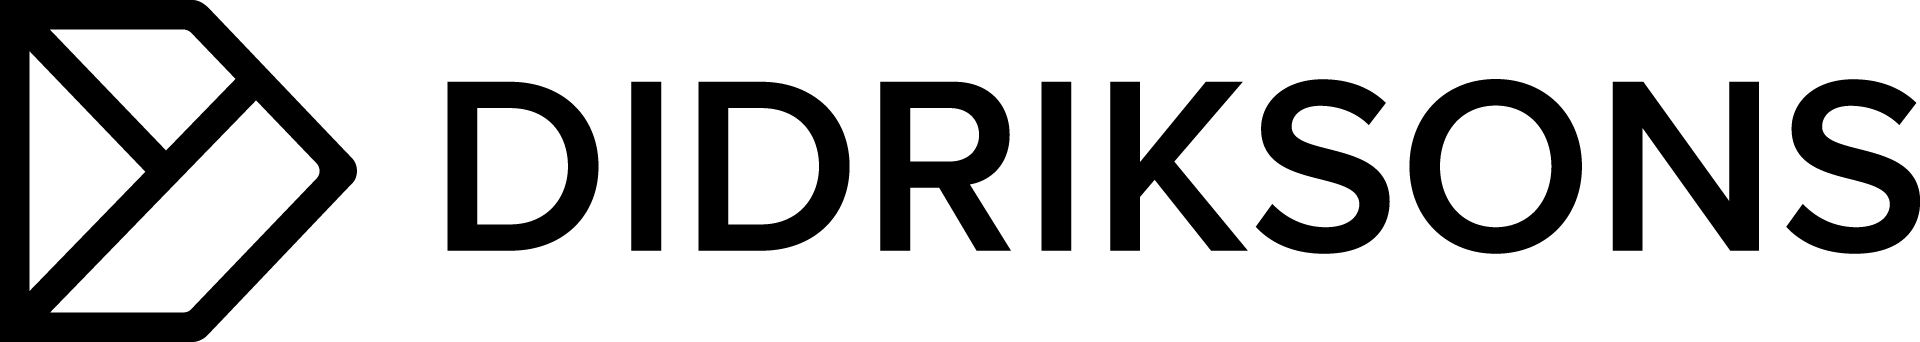 Logo Didriksons